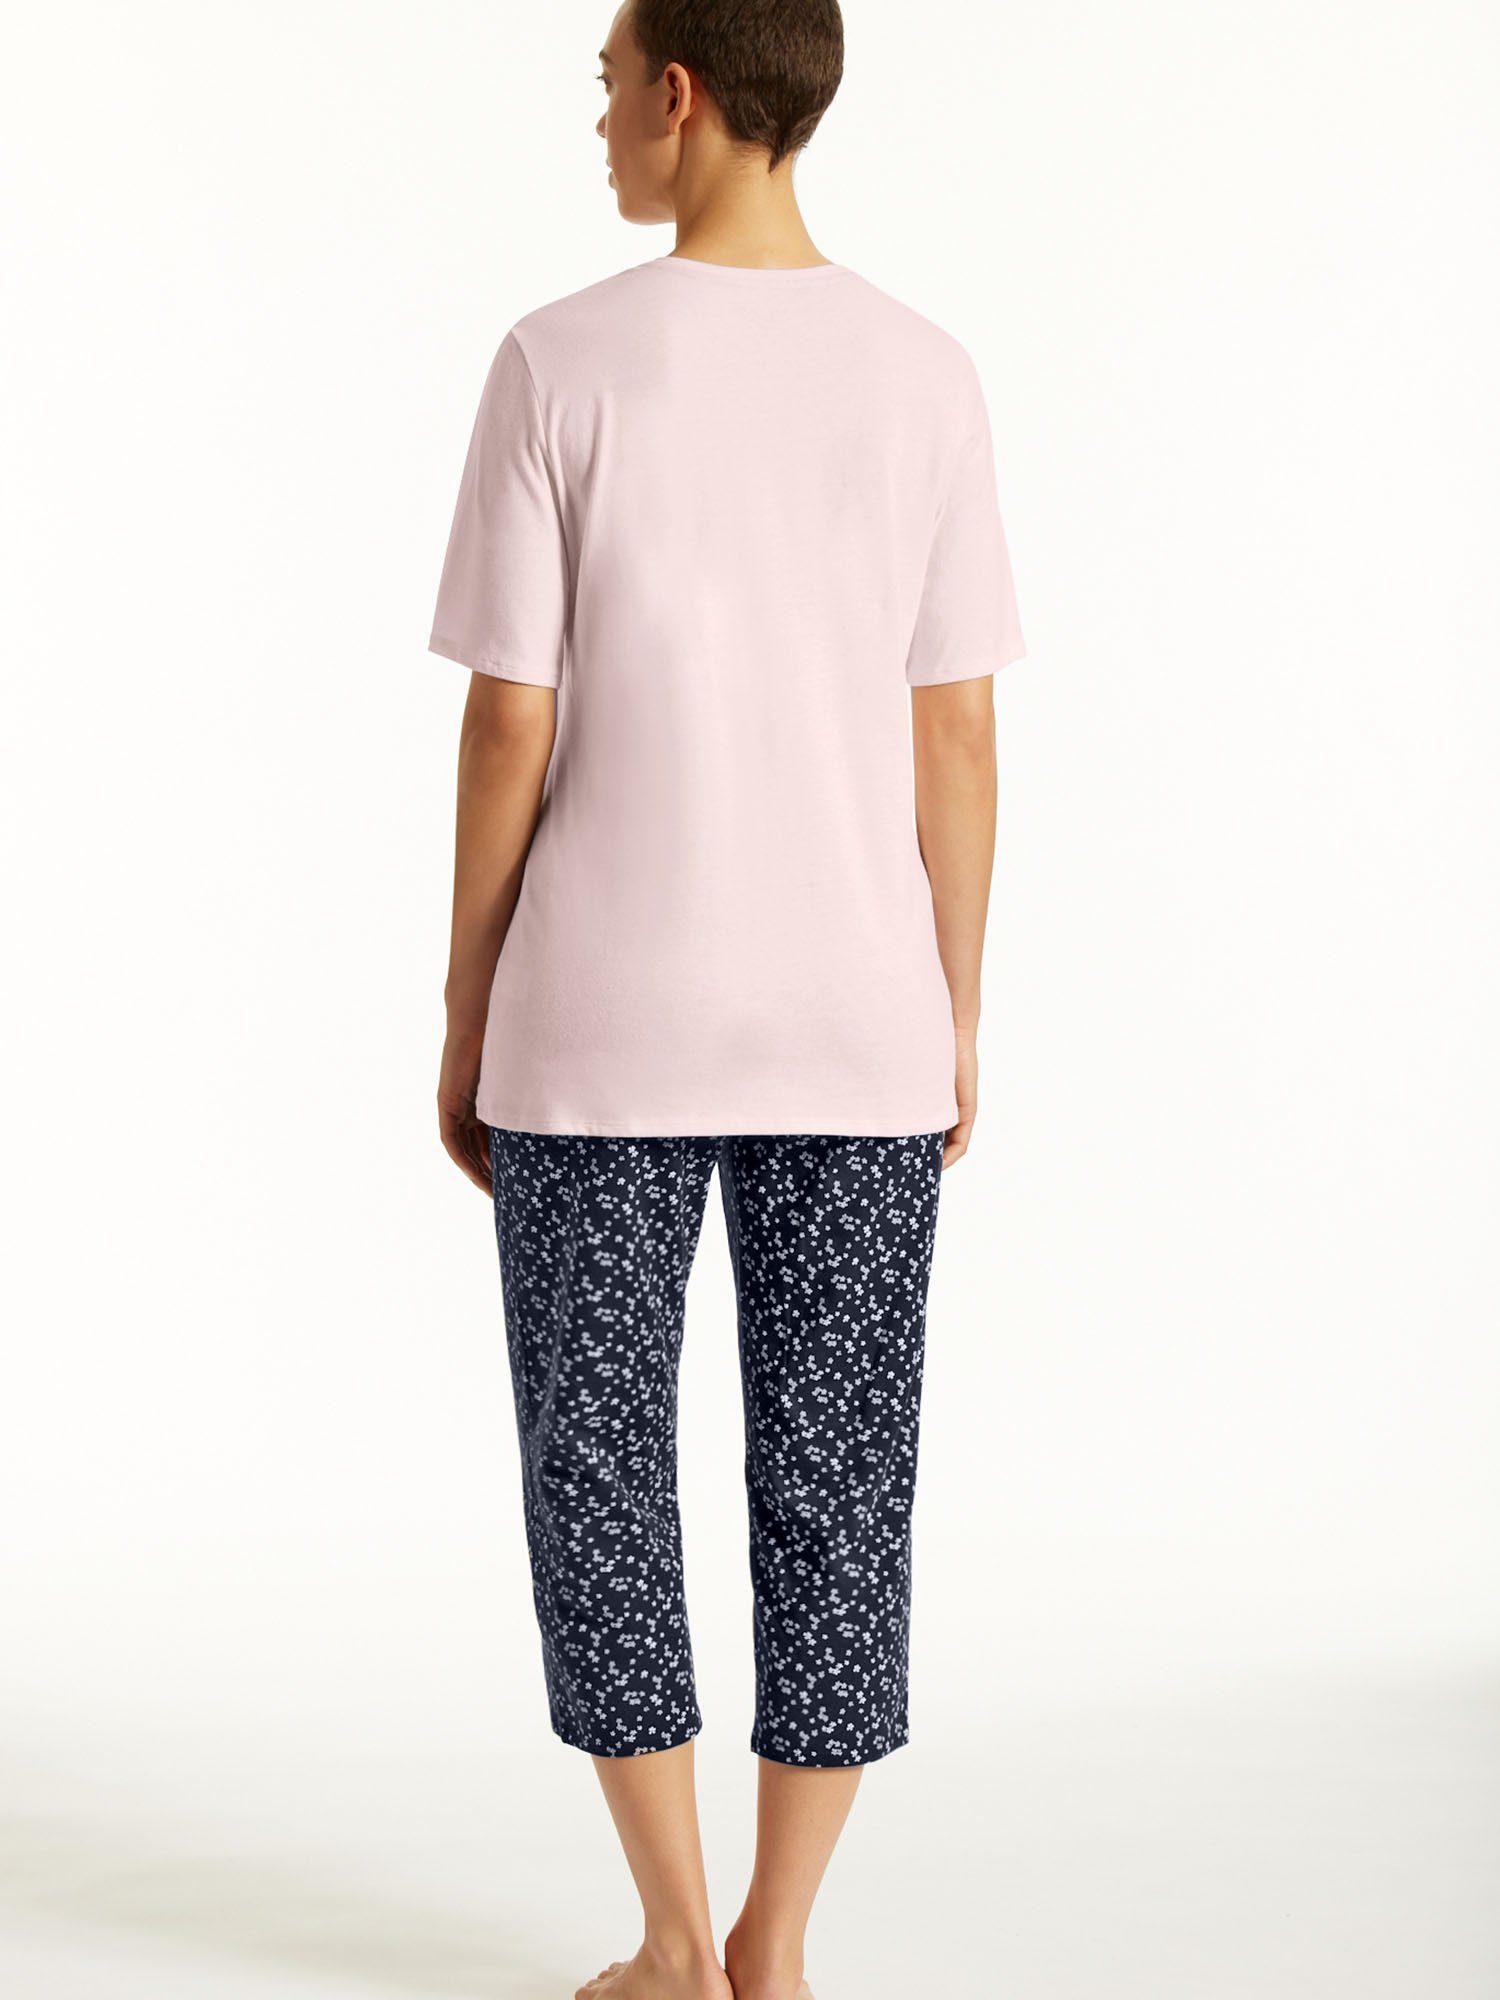 tlg) (2 Damen Schiesser Schlafanzug rosé Pyjama